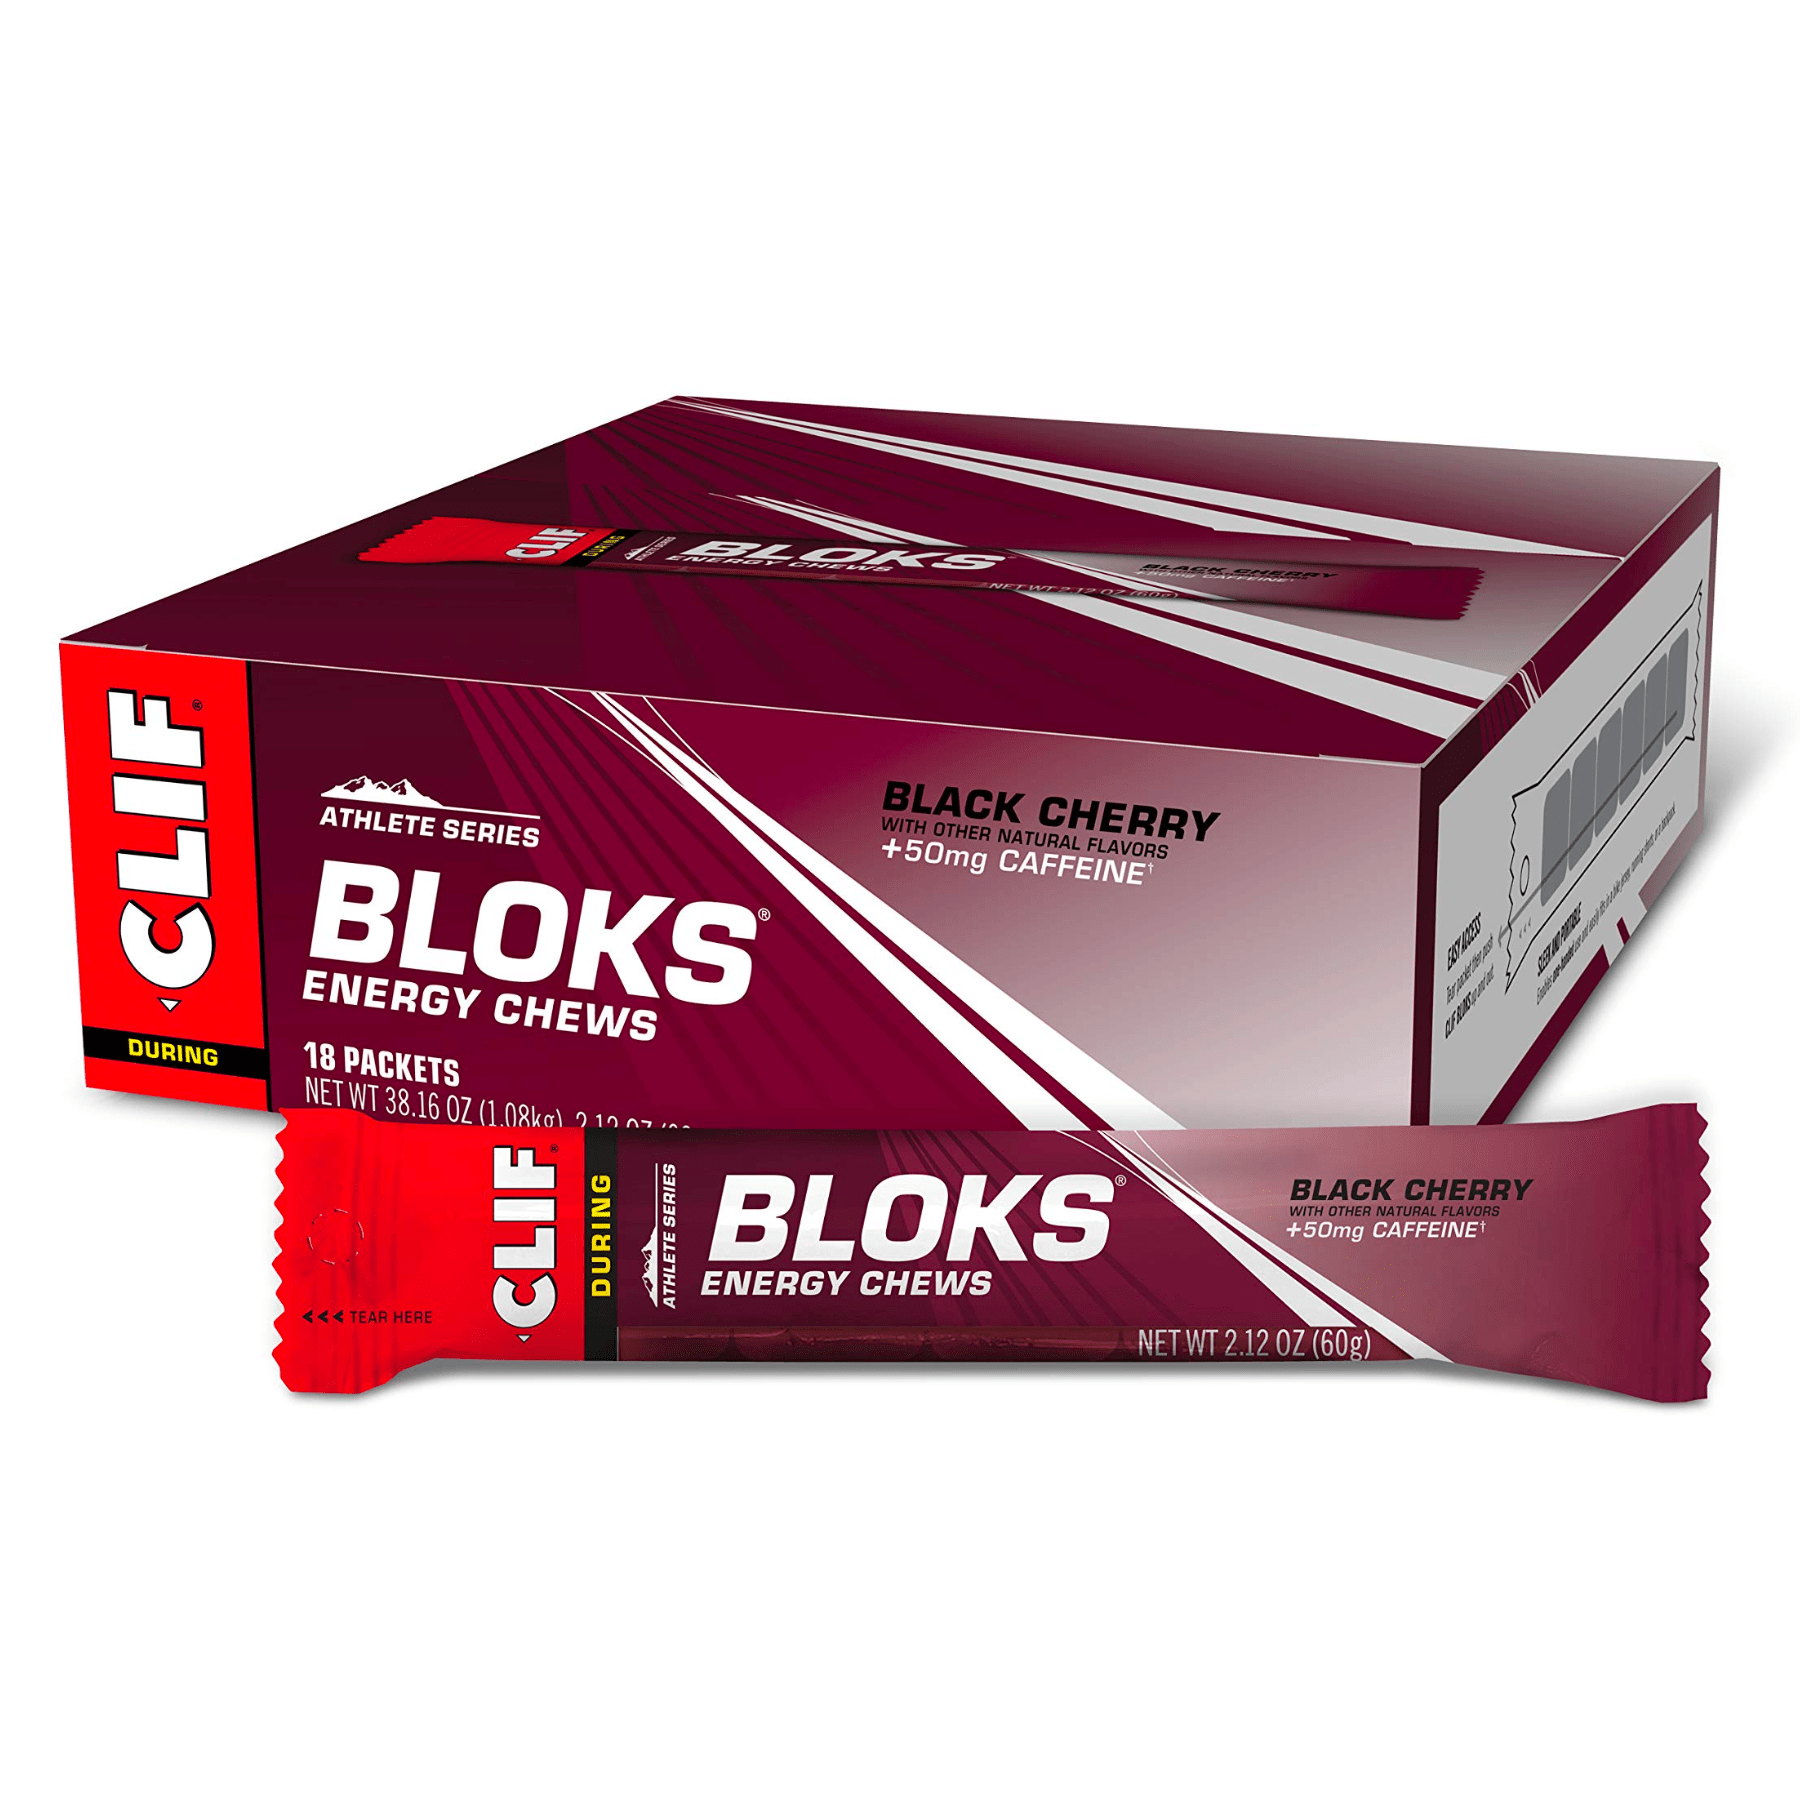 clif Energy Chews Box of 18 / Black Cherry (50mg Caffeine) BLOKS Energy Chews CLIF55